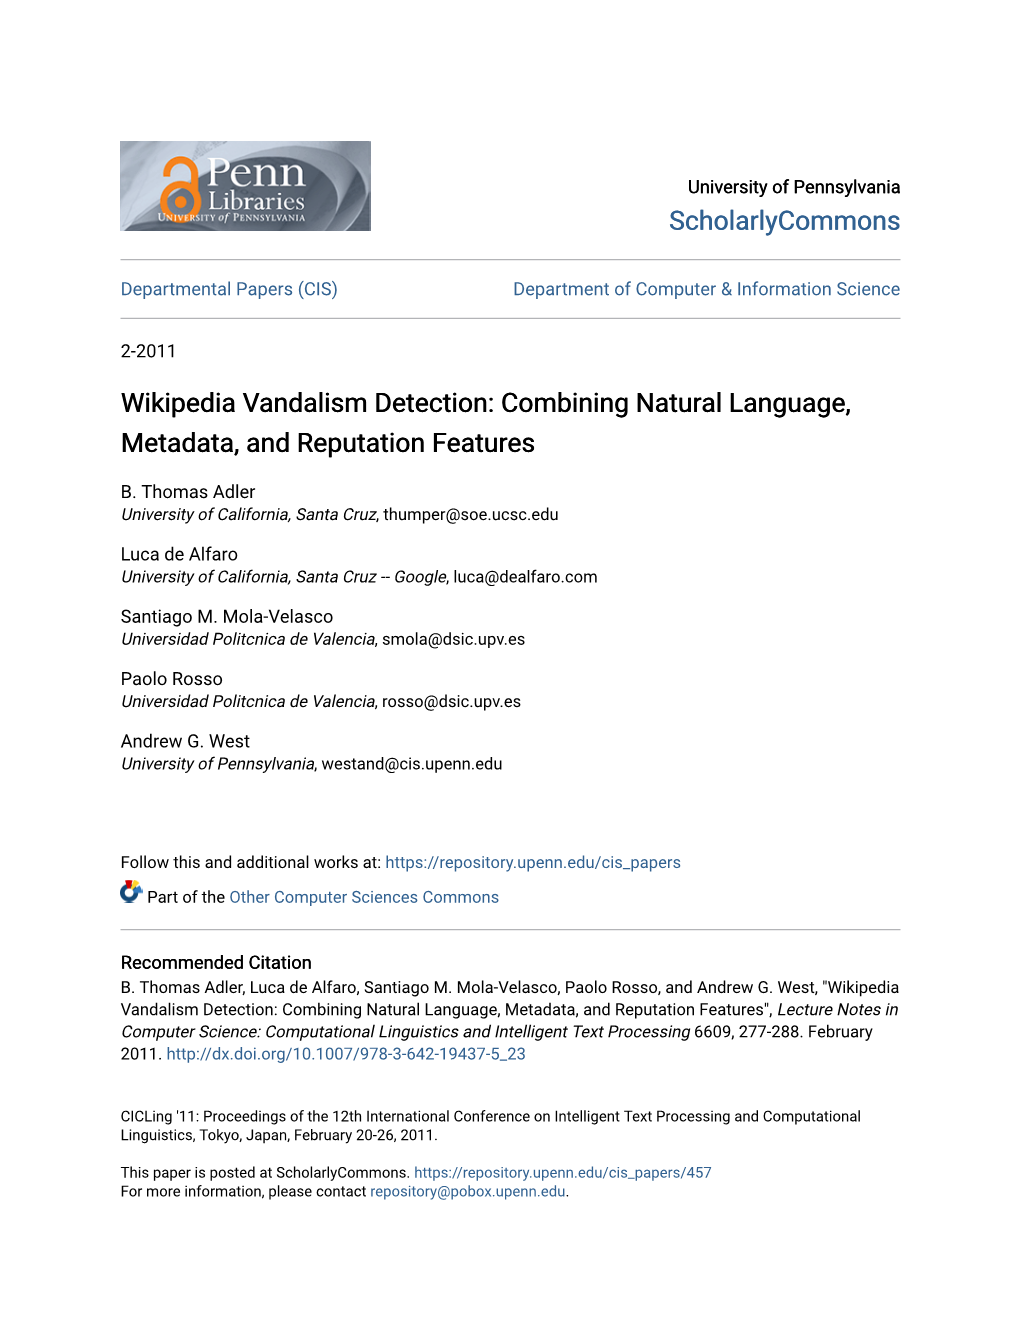 Wikipedia Vandalism Detection: Combining Natural Language, Metadata, and Reputation Features